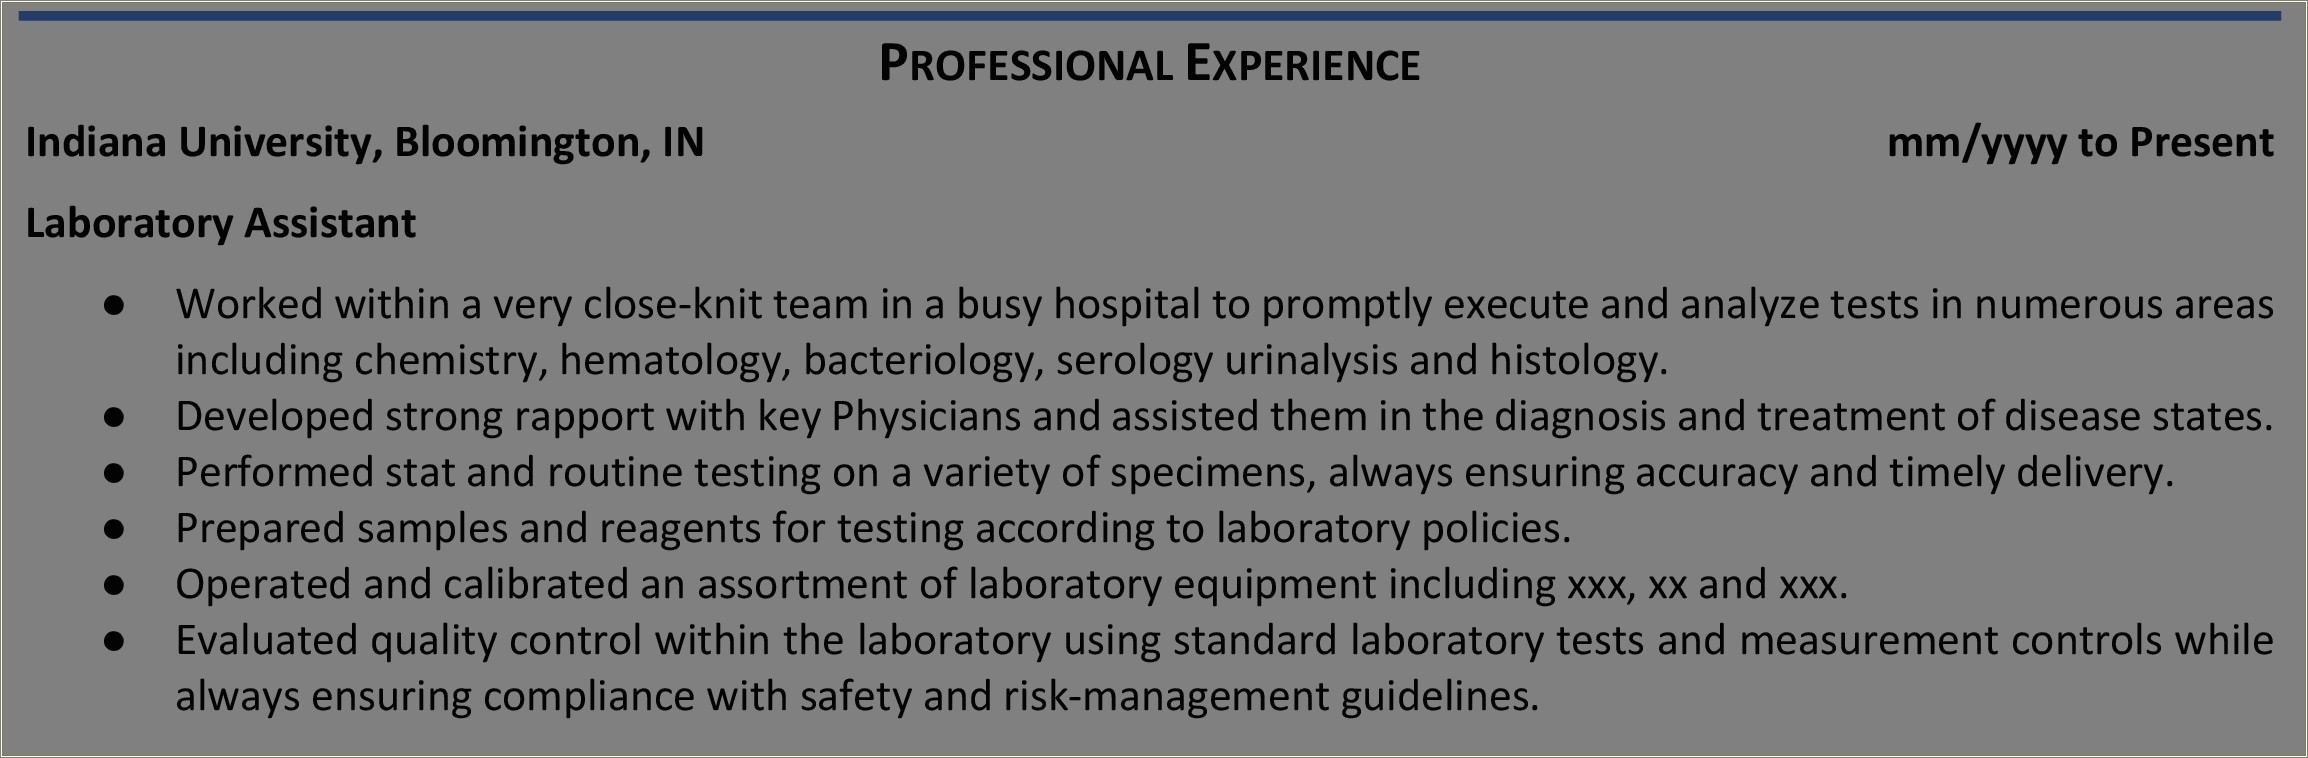 Include Work Experience In Medical School Resume